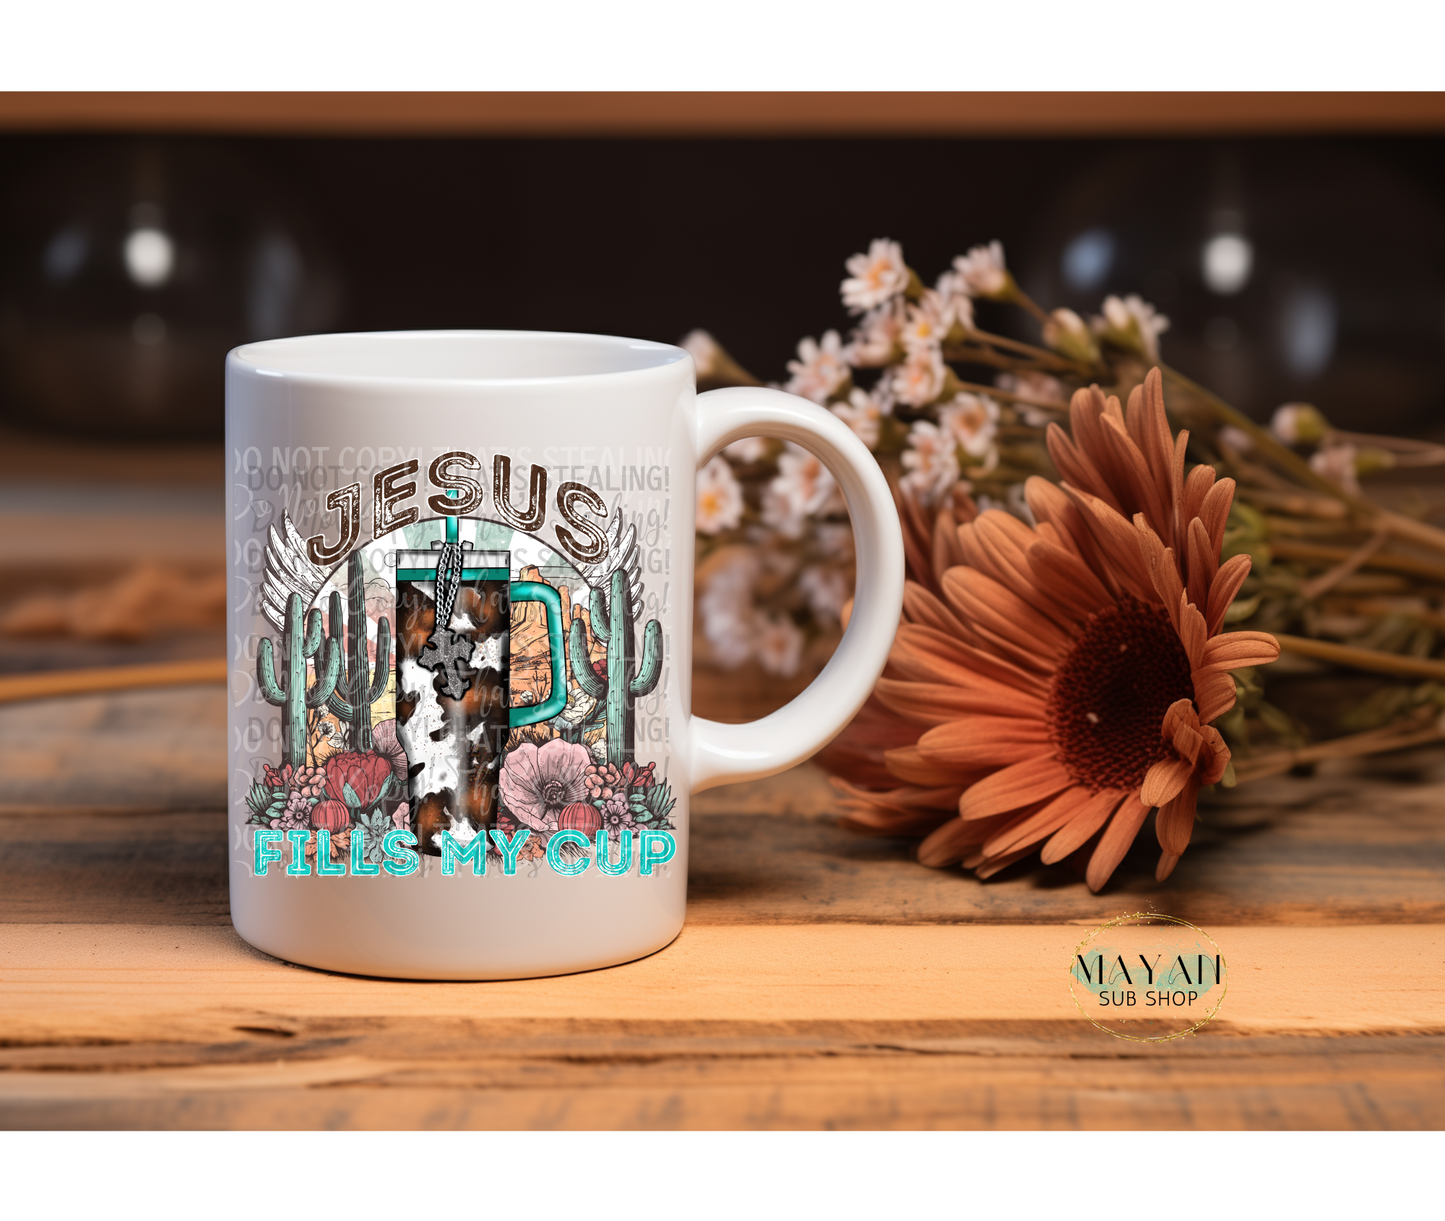 Jesus fills my cup 15 oz. coffee mug. -Mayan Sub Shop